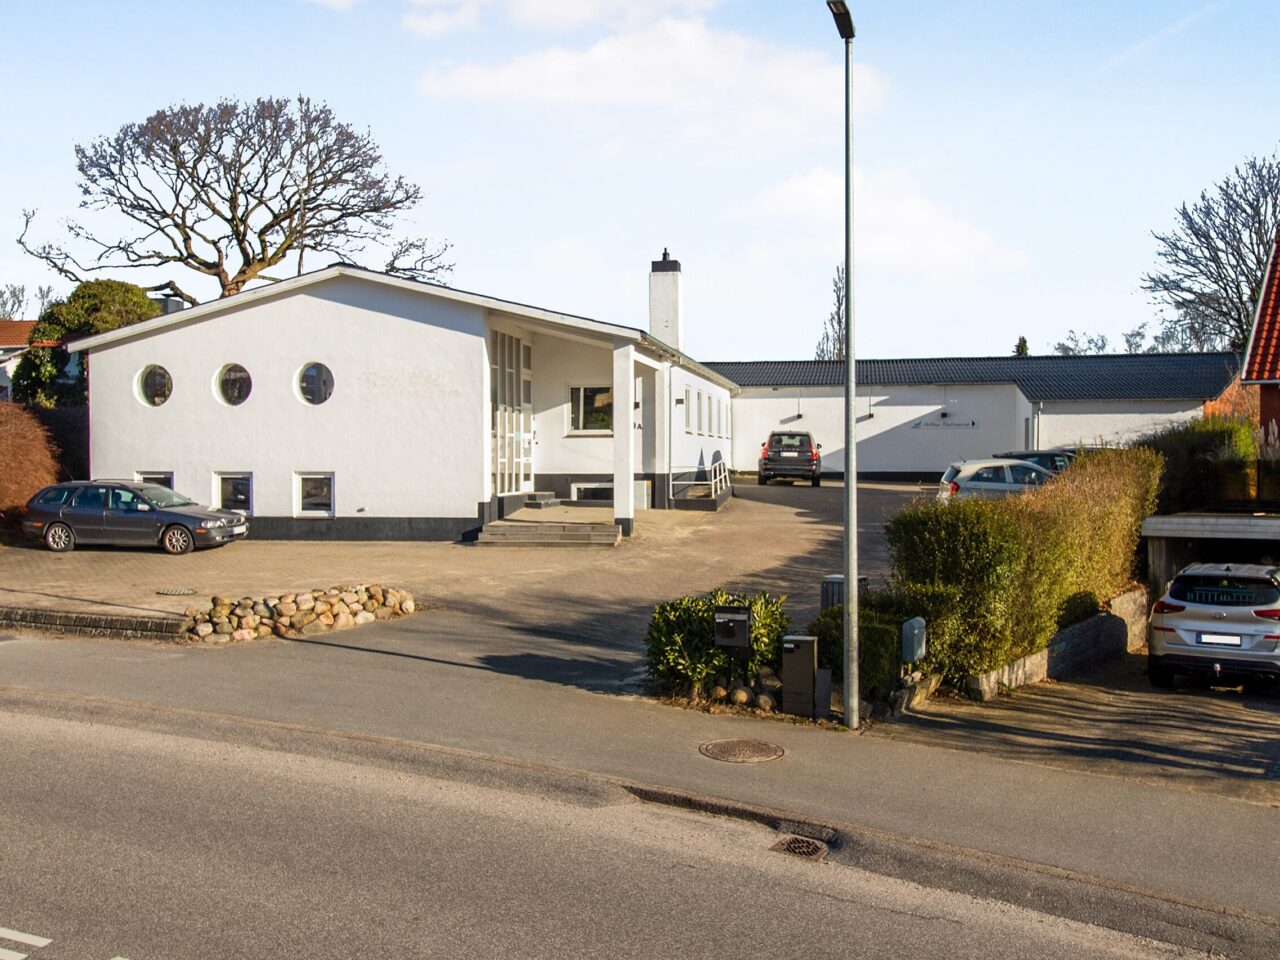 Kontor og Lager til Salg i Kolding - Hvid bygning som er facaden